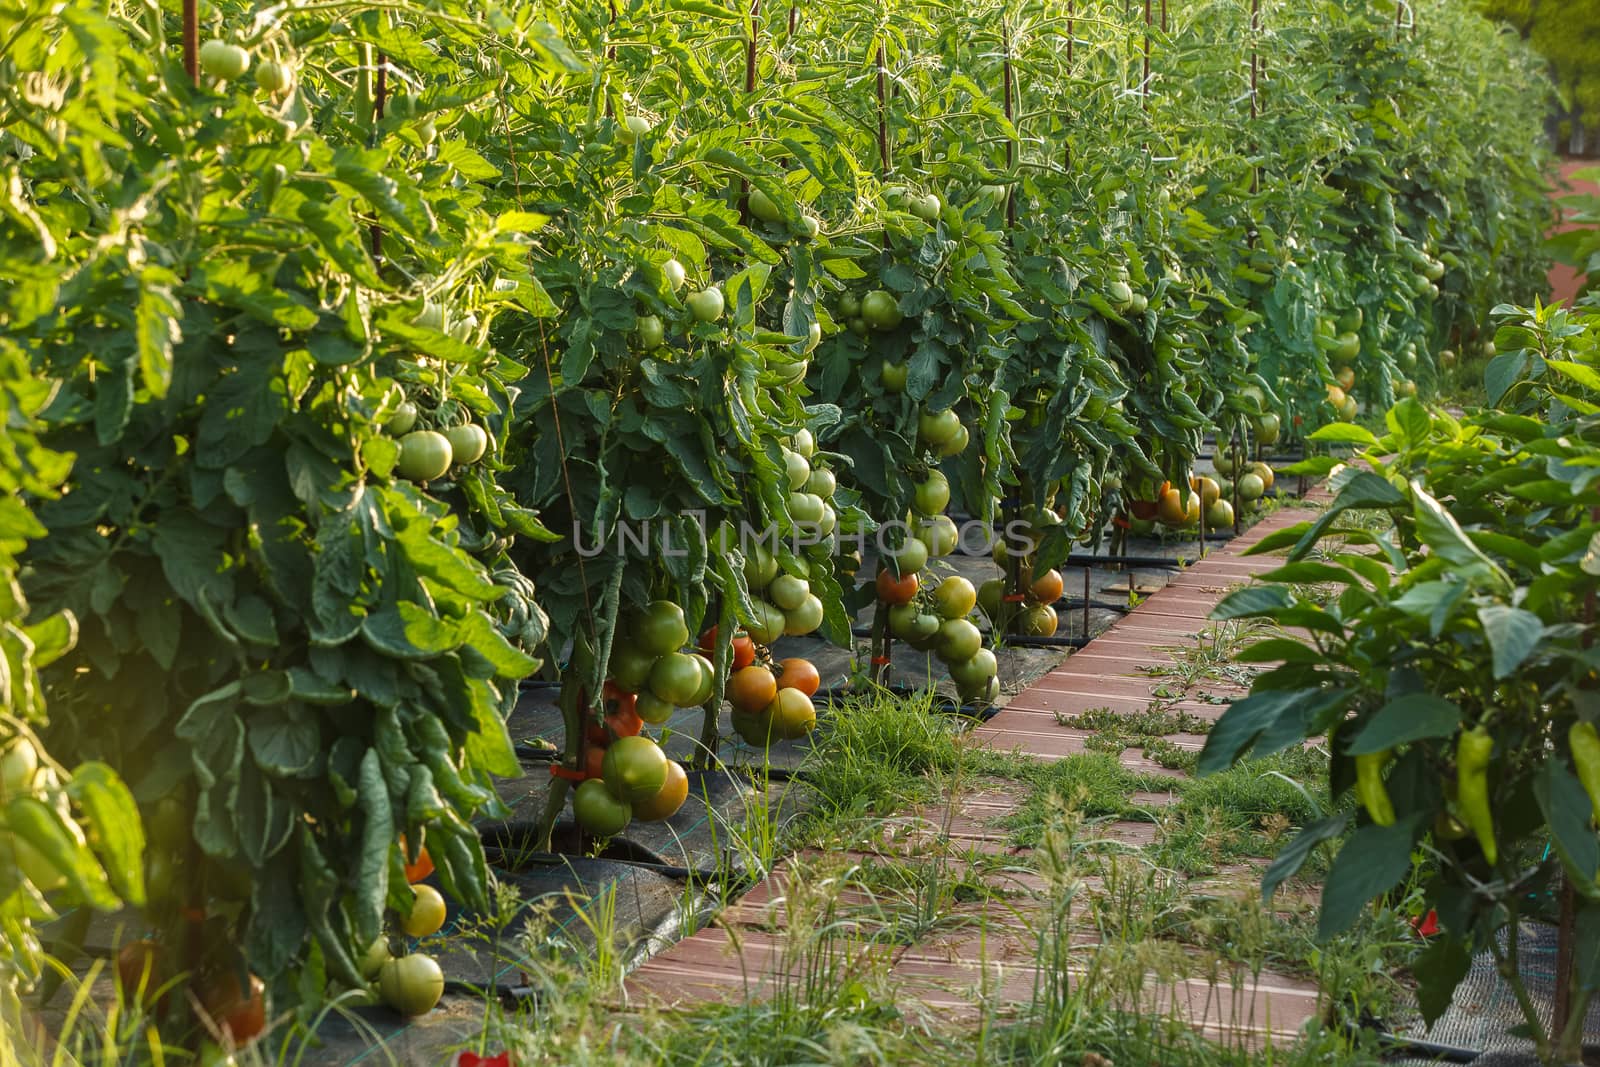 Tomatoes ripening in a garden by Slast20